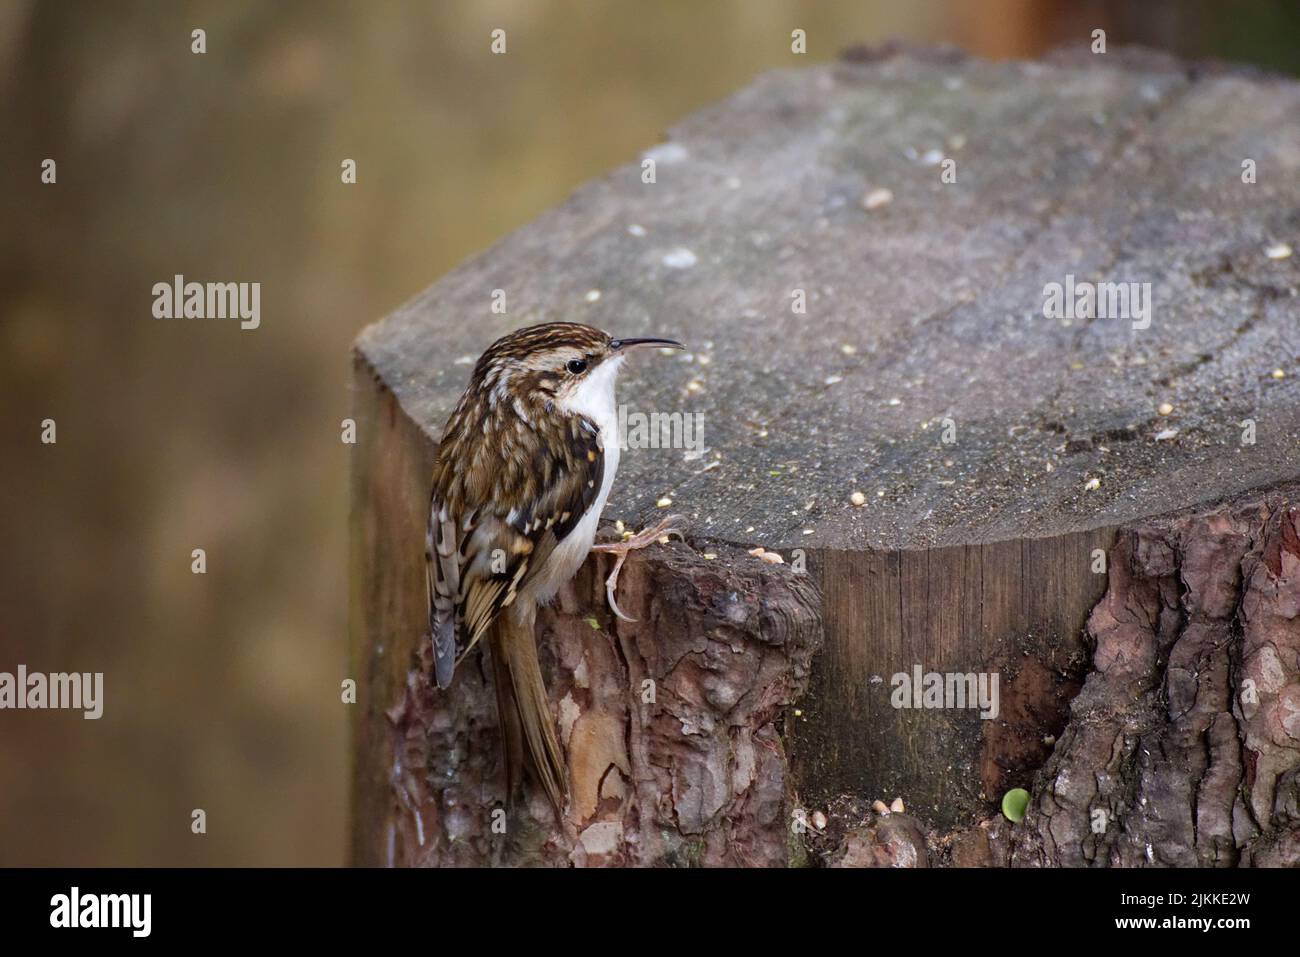 A closeup shot of a Eurasian treecreeper bird perched on a tree stump Stock Photo